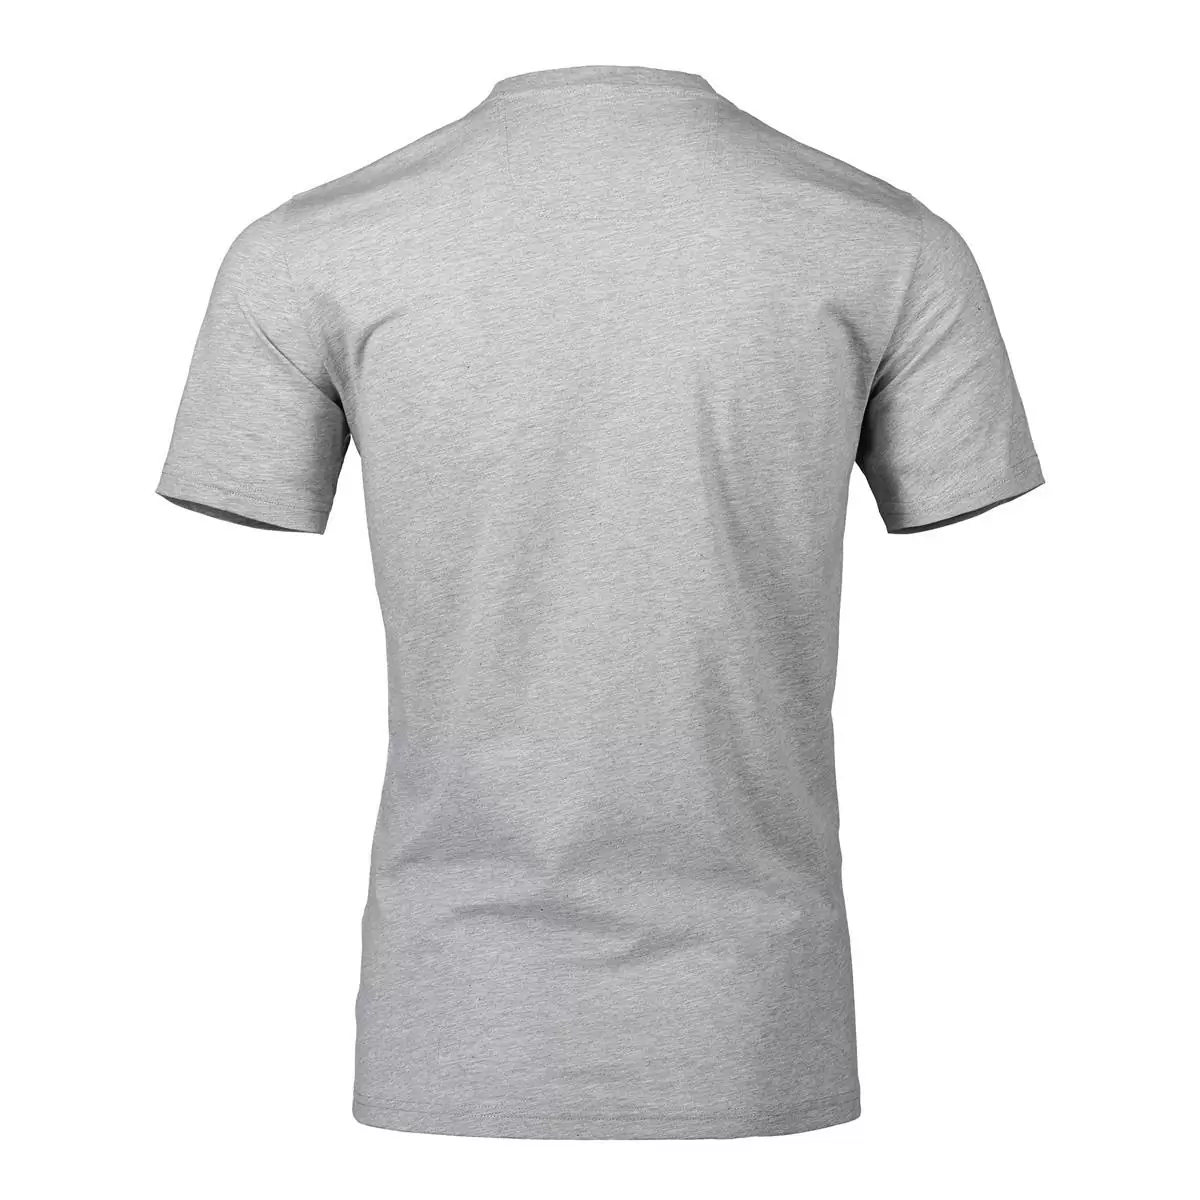 Kurzarm T-Shirt Grau Größe M #1